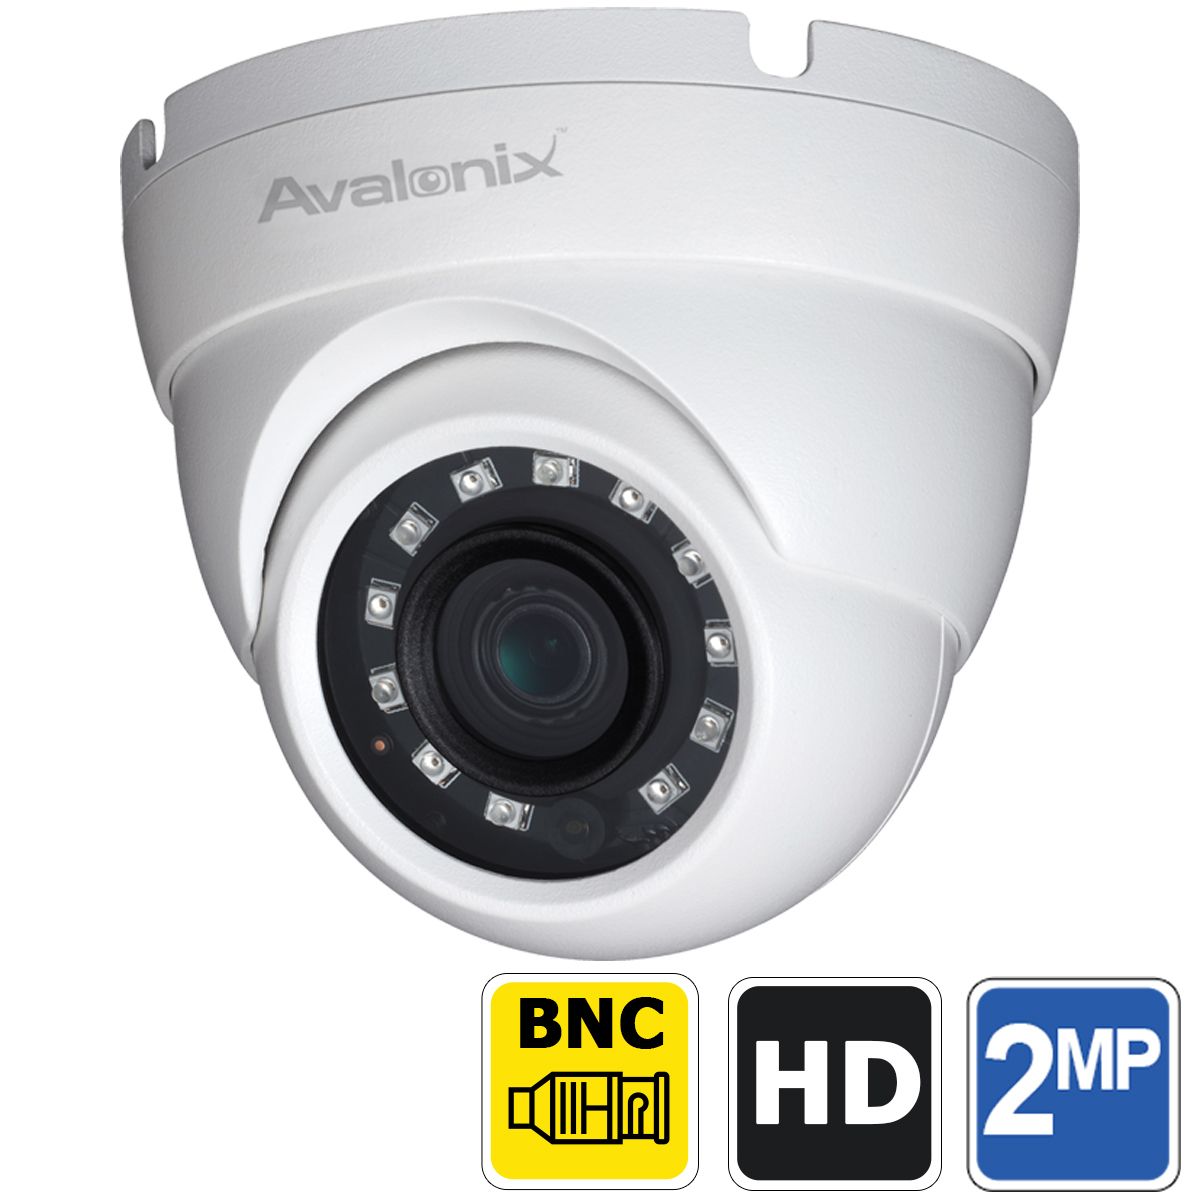 1080P Analog Dome Camera, White